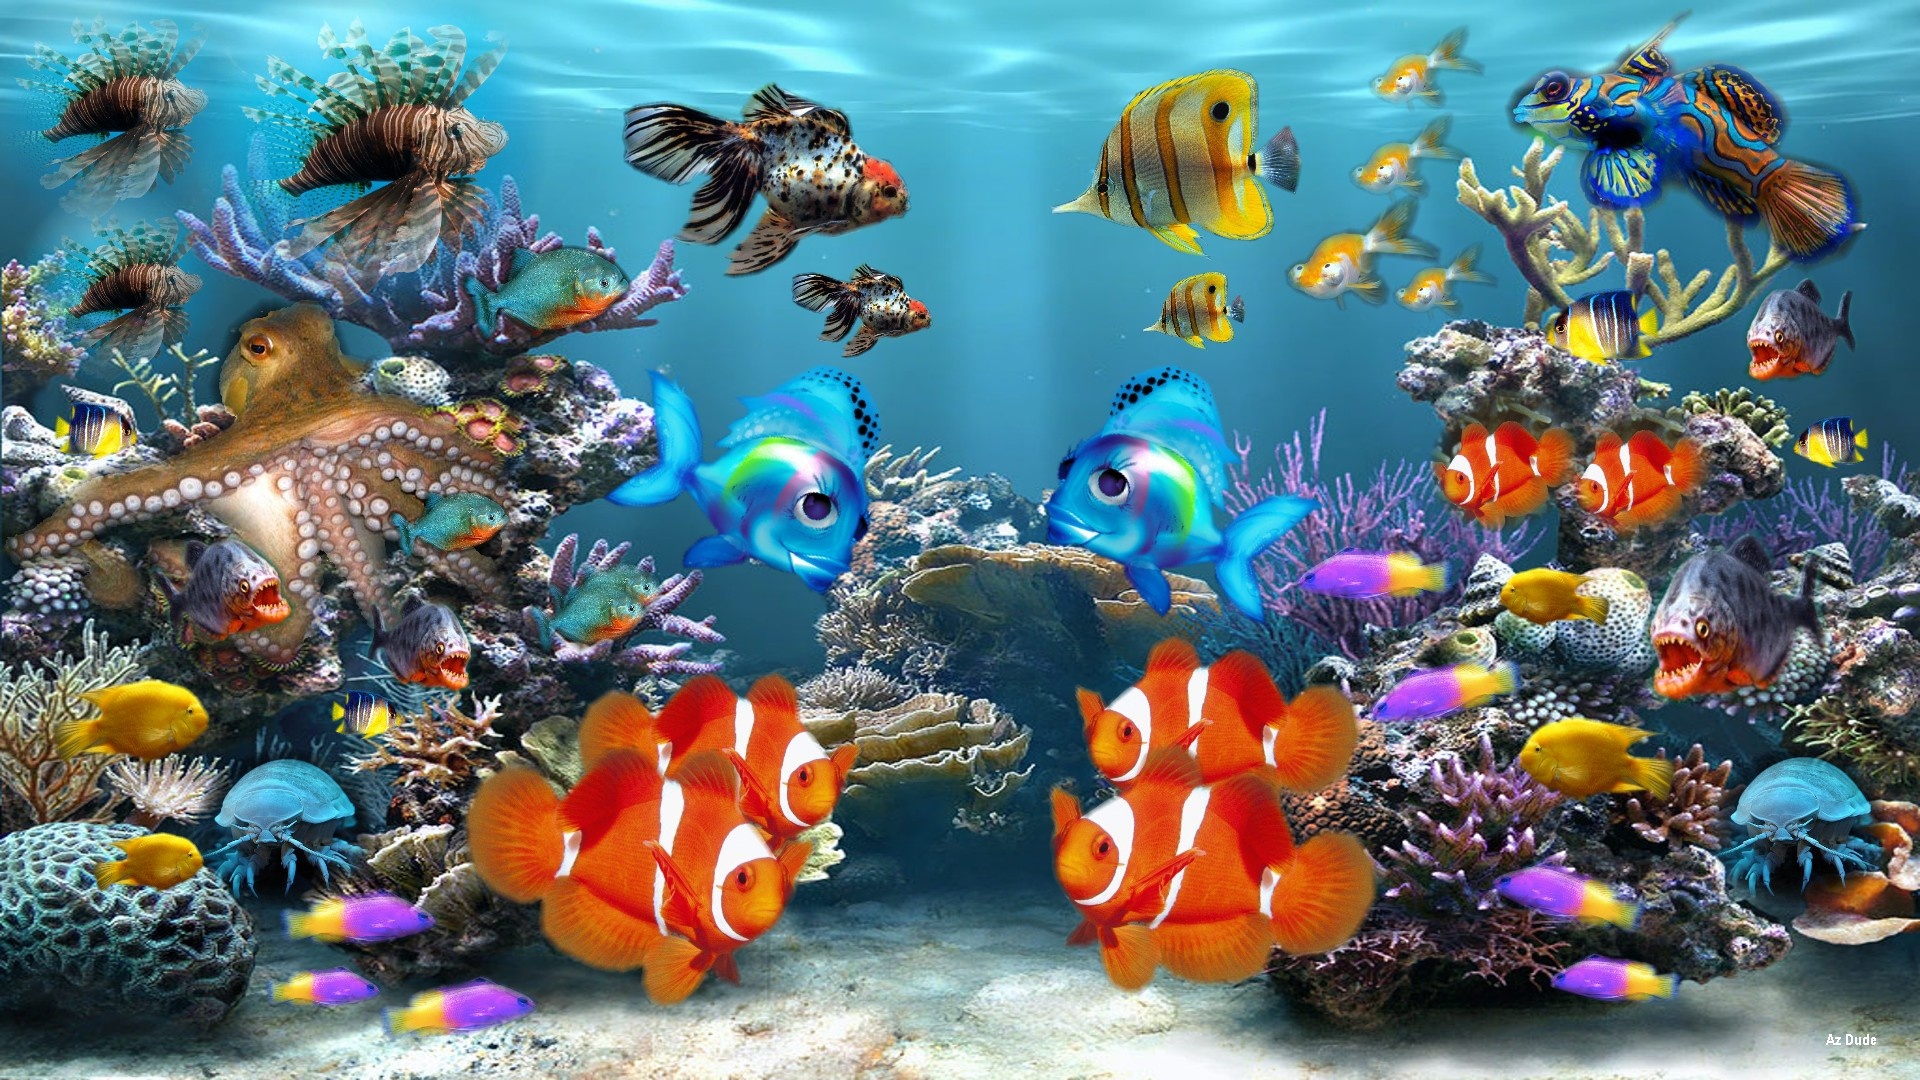 Similar Desktop HD Fish Tank Wallpaper Animated Pictures Of